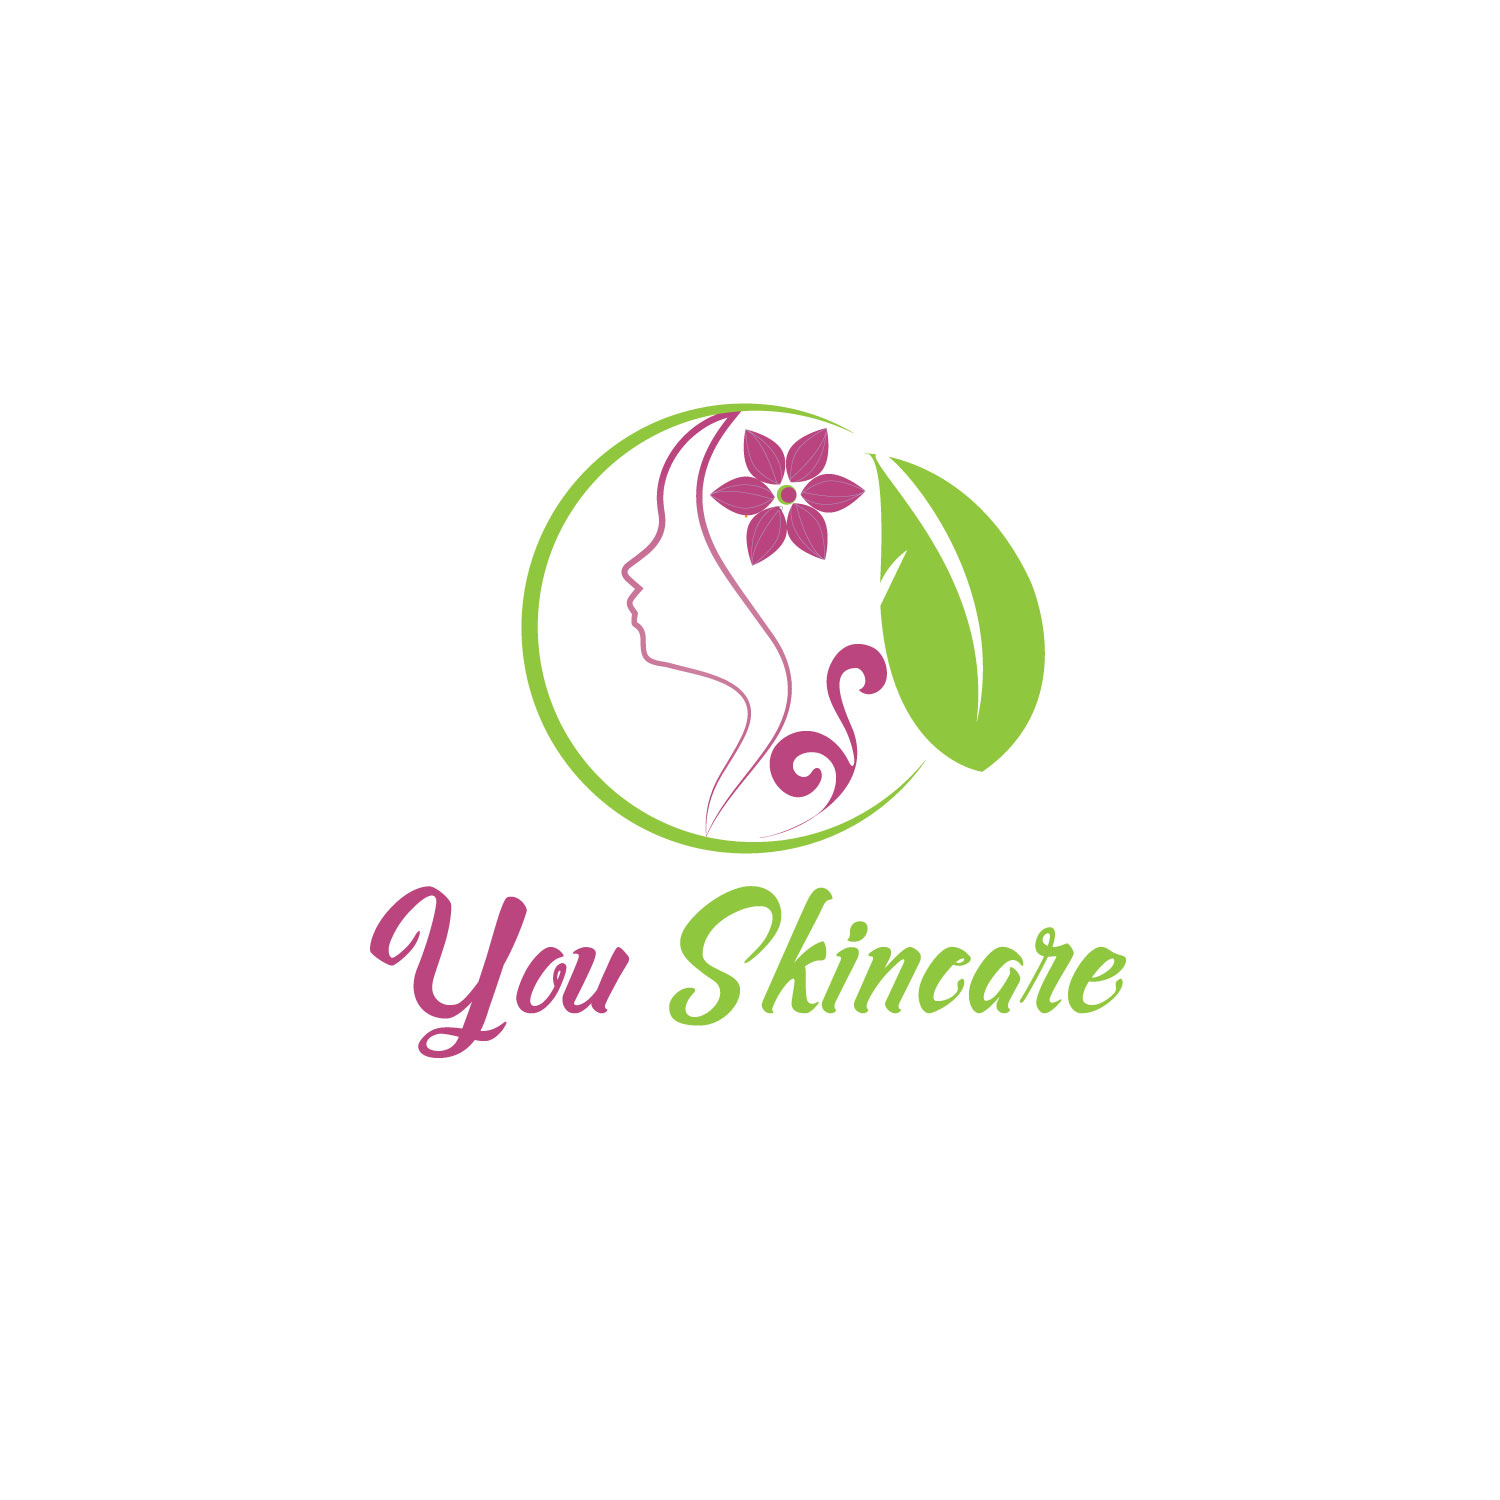 Elegant, Feminine, Skin Care Product Logo Design for You.